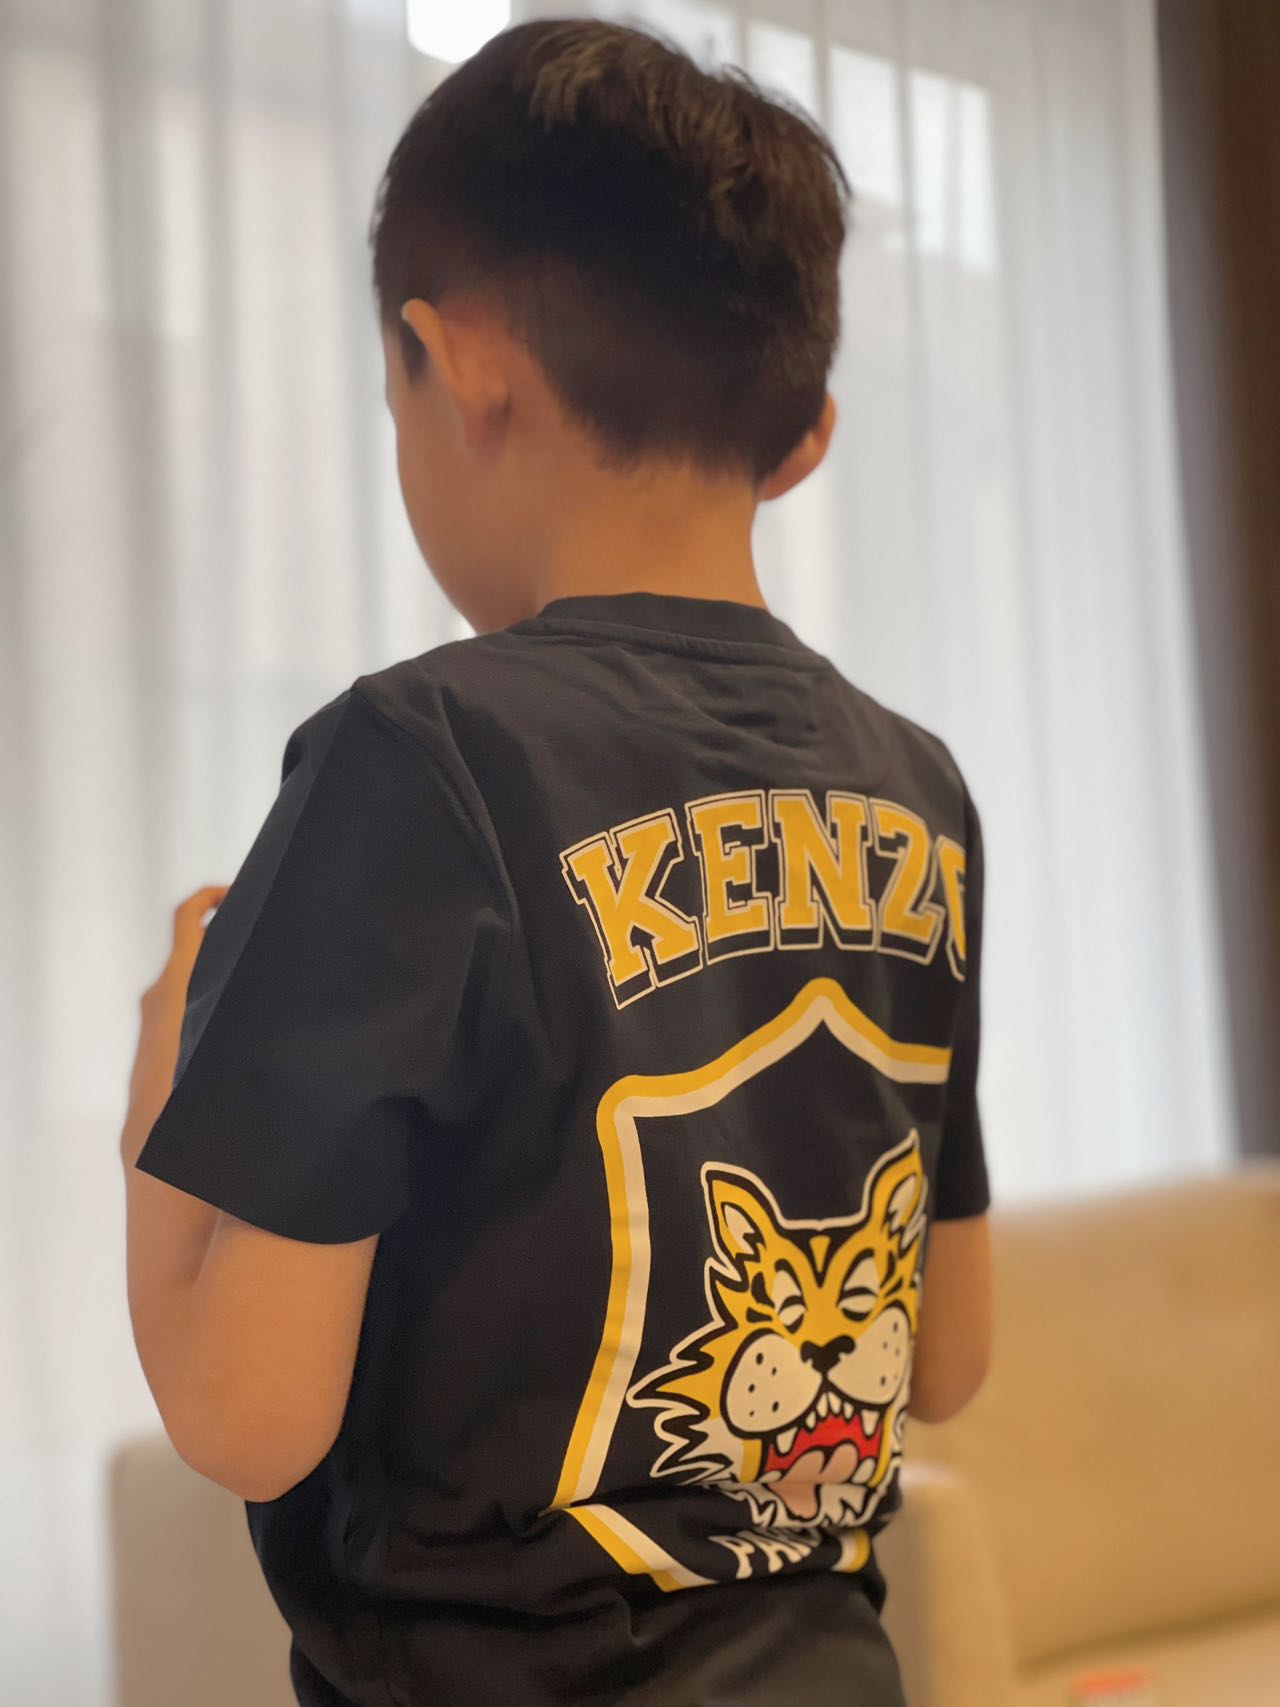 Kenzo Boys Navy Blue Cotton T-Shirt